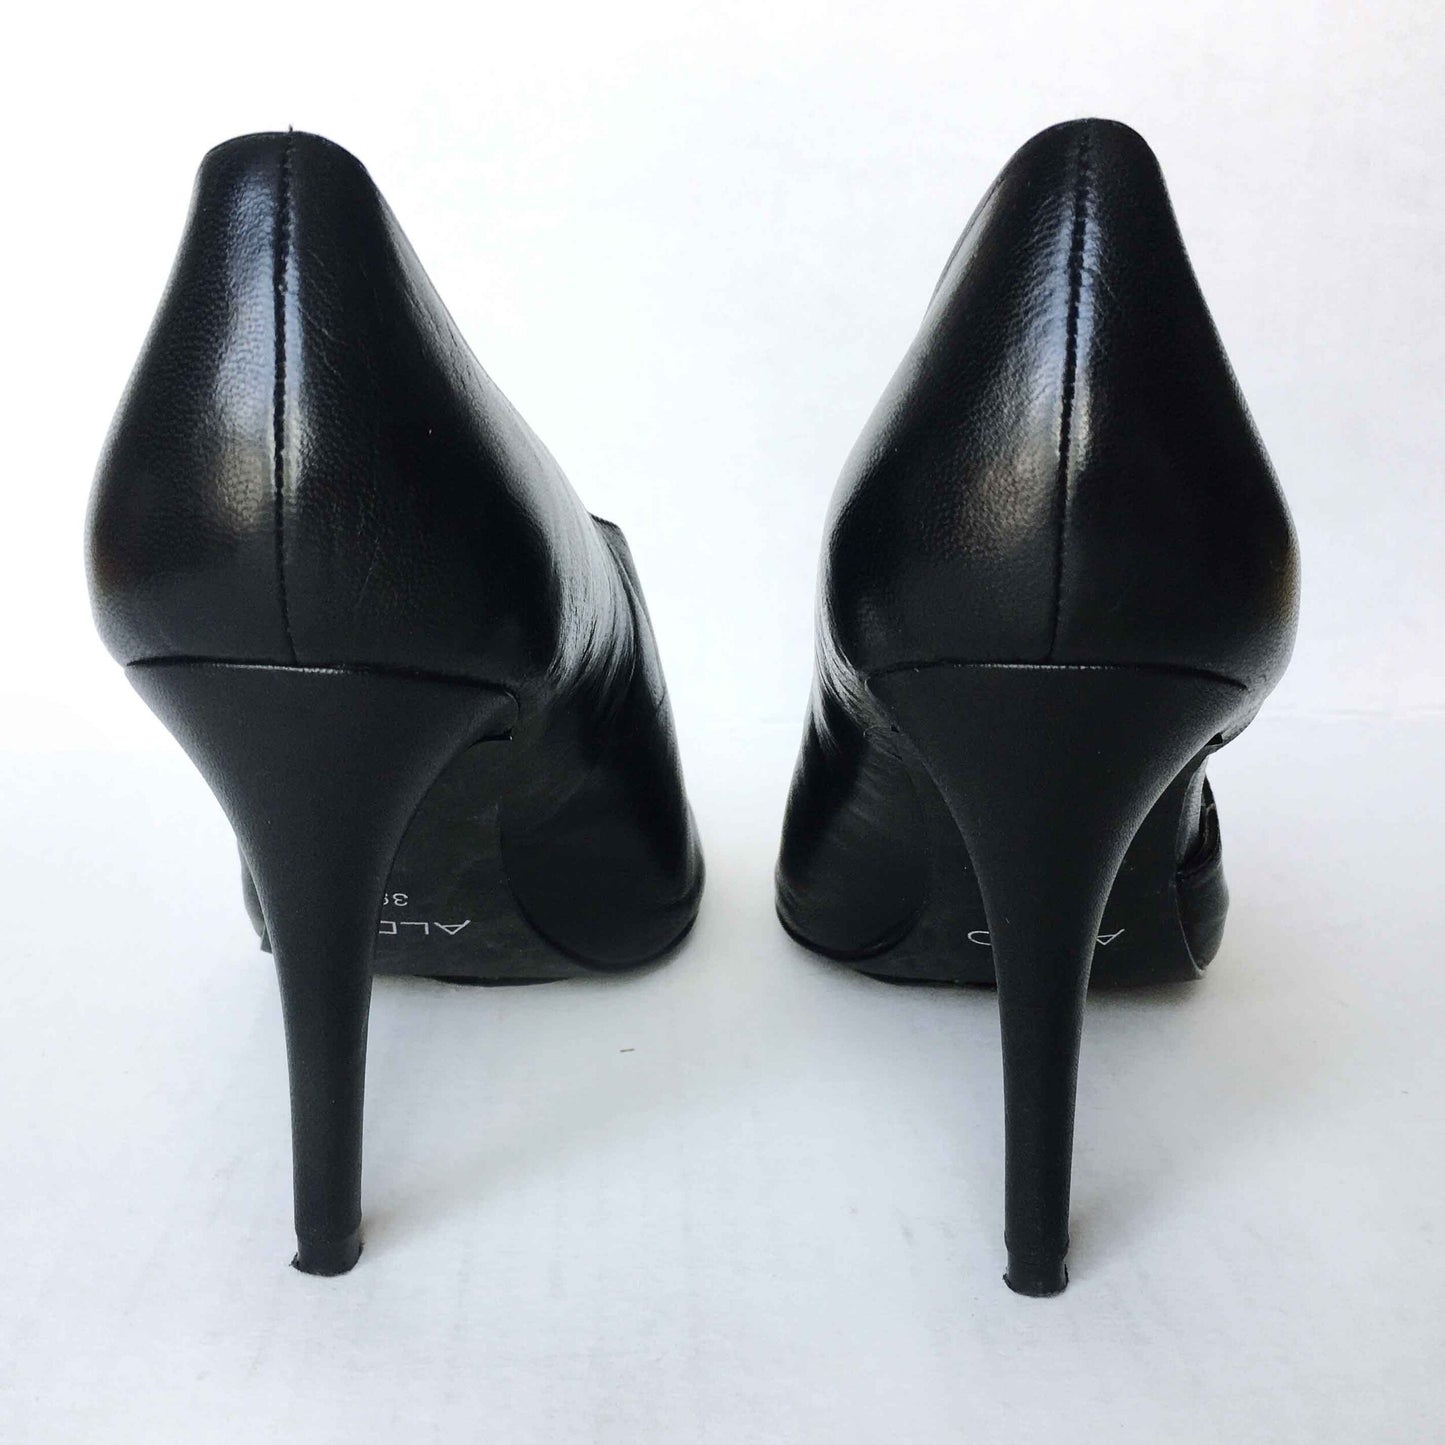 Aldo side cut out peep toe leather heel - size 39